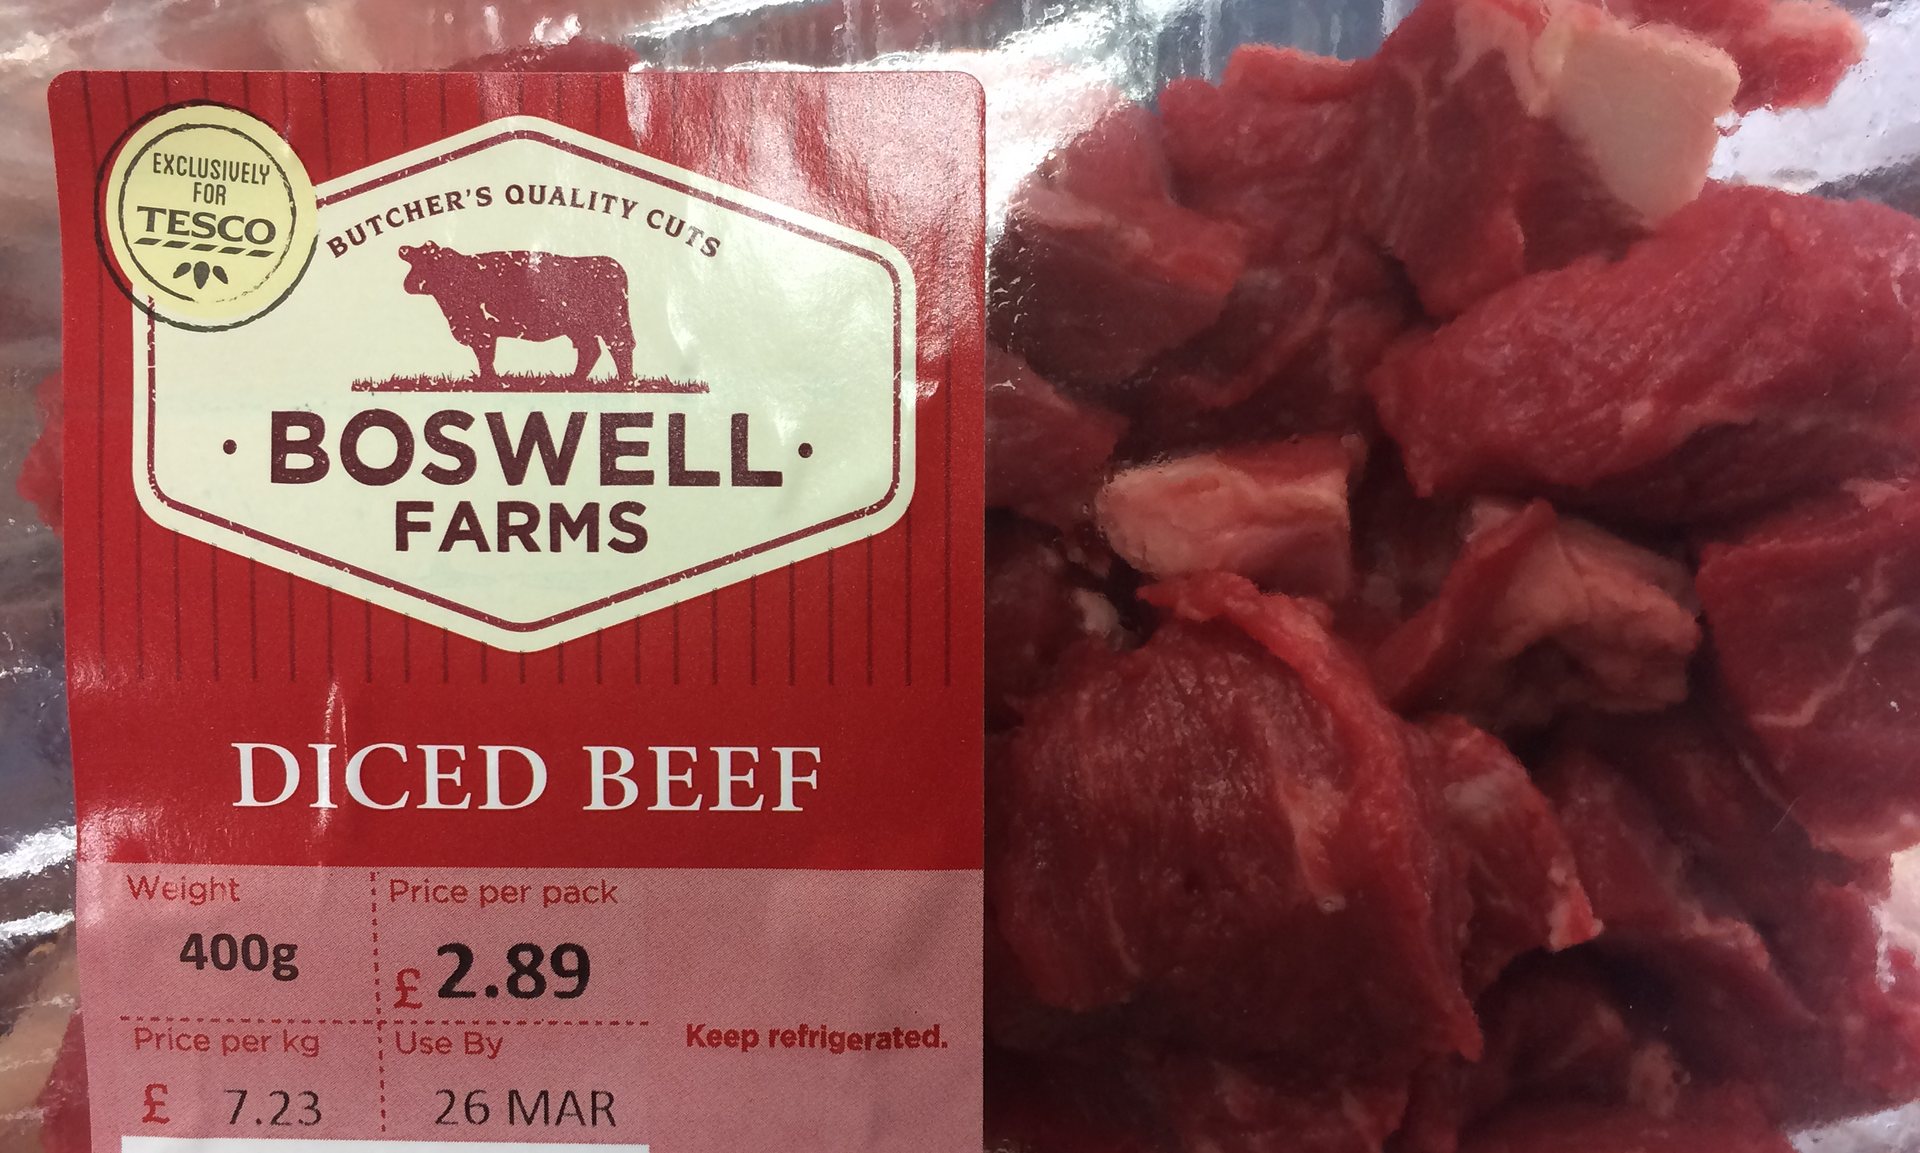 Tesco’s 'Boswell Farm' diced beef (Photograph: Tesco)